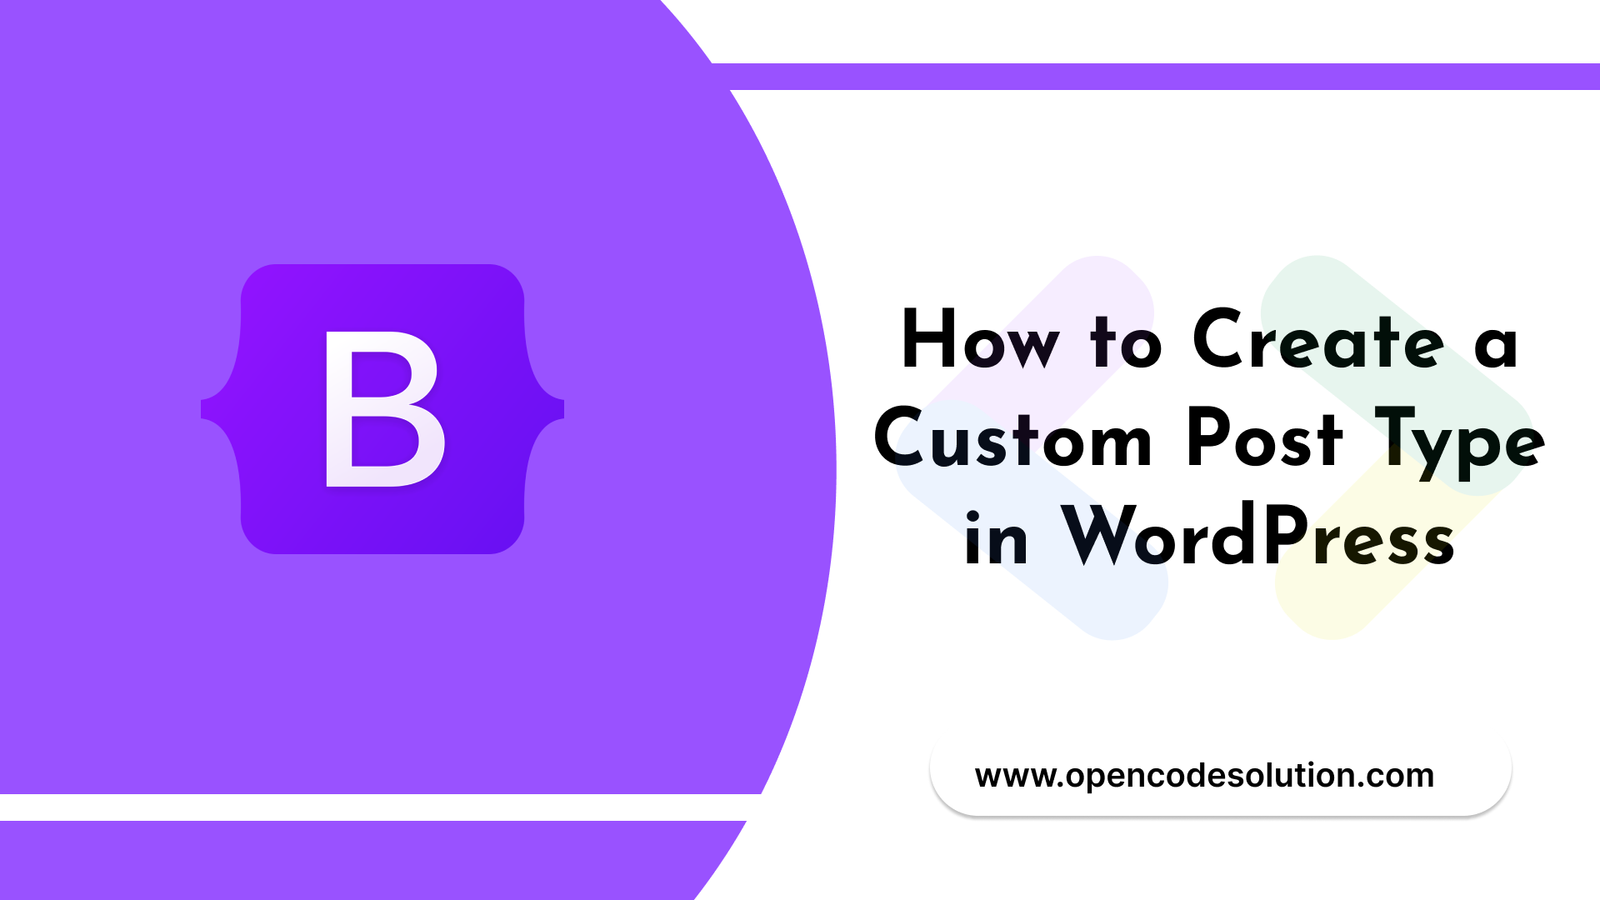 How to Create a Custom Post Type in WordPress